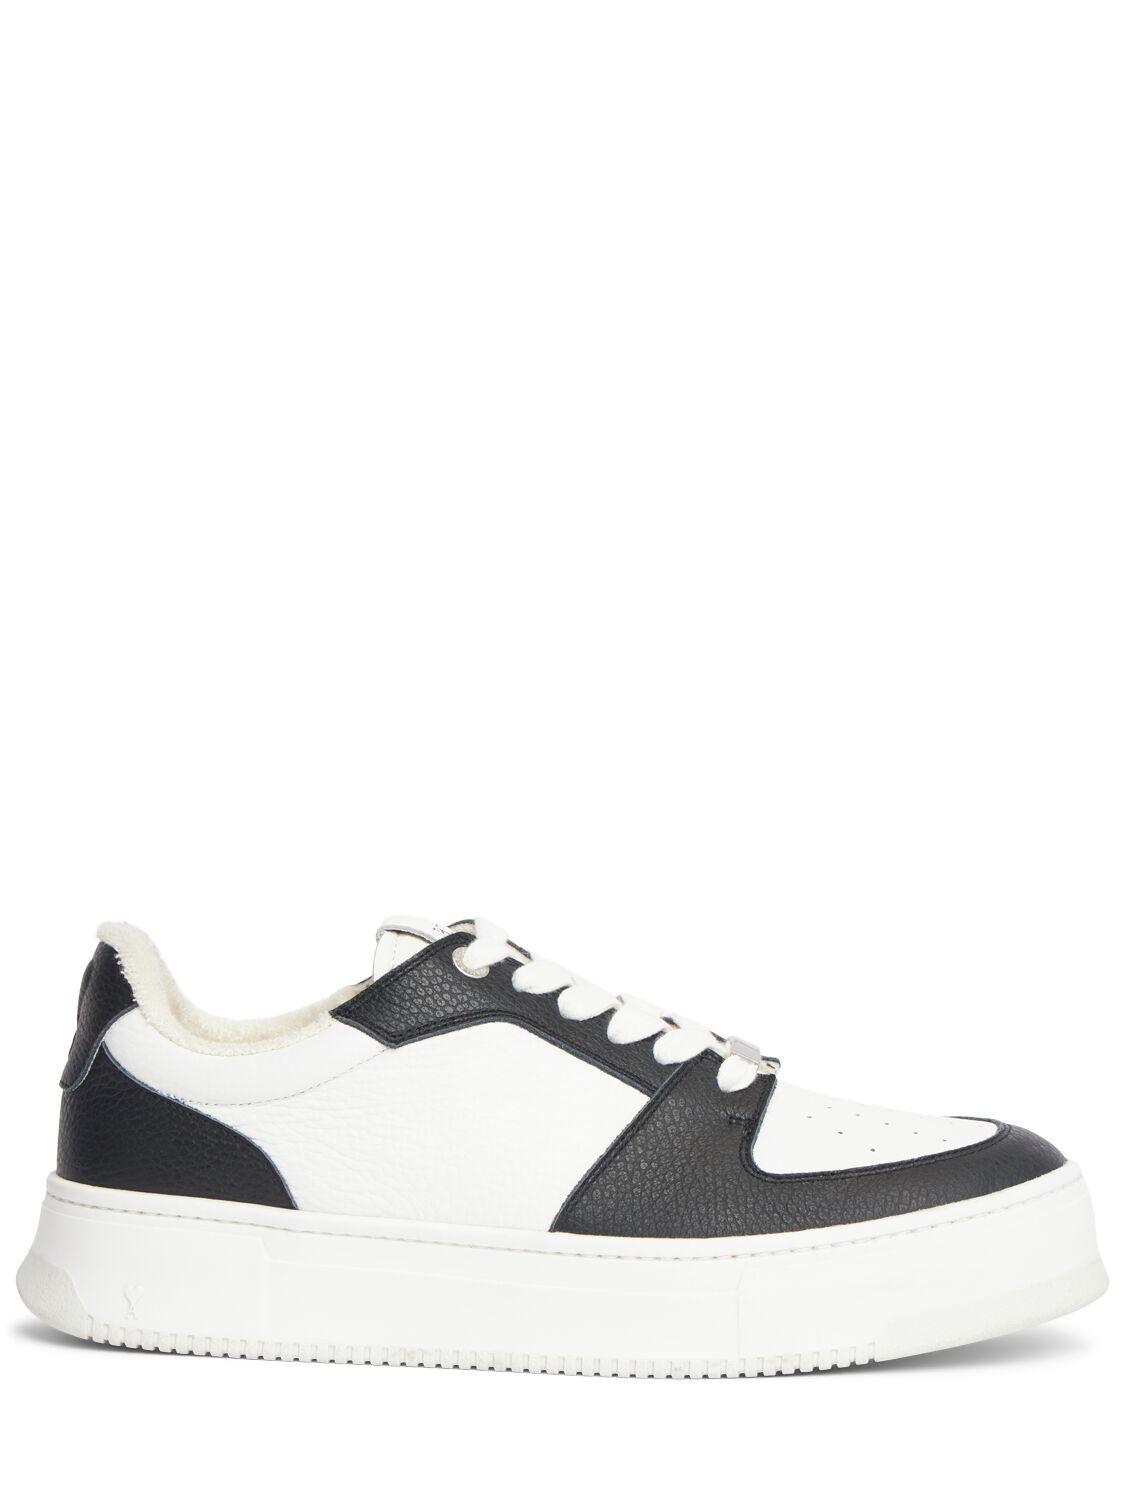 Ami Alexandre Mattiussi New Arcade Lace-up Sneakers In White/black